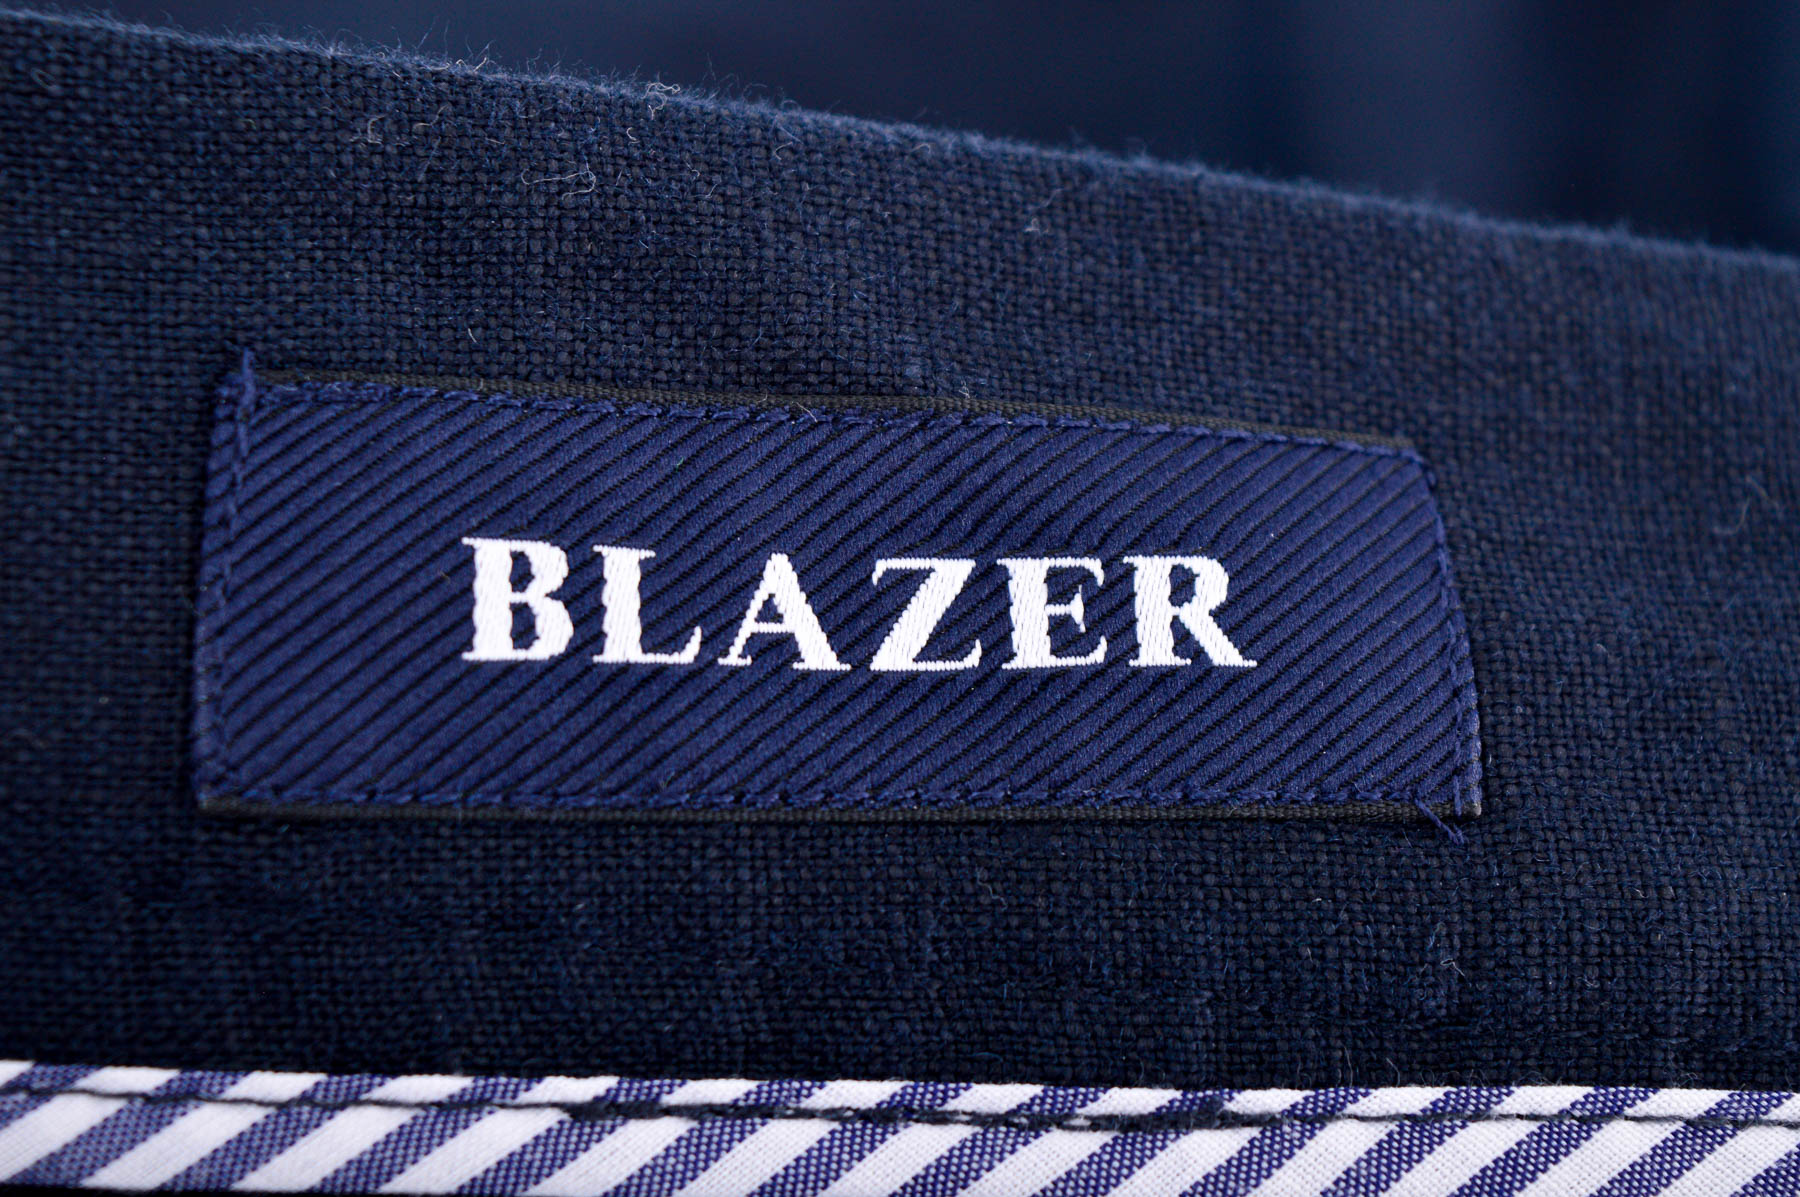 Men's trousers - Blazer - 2